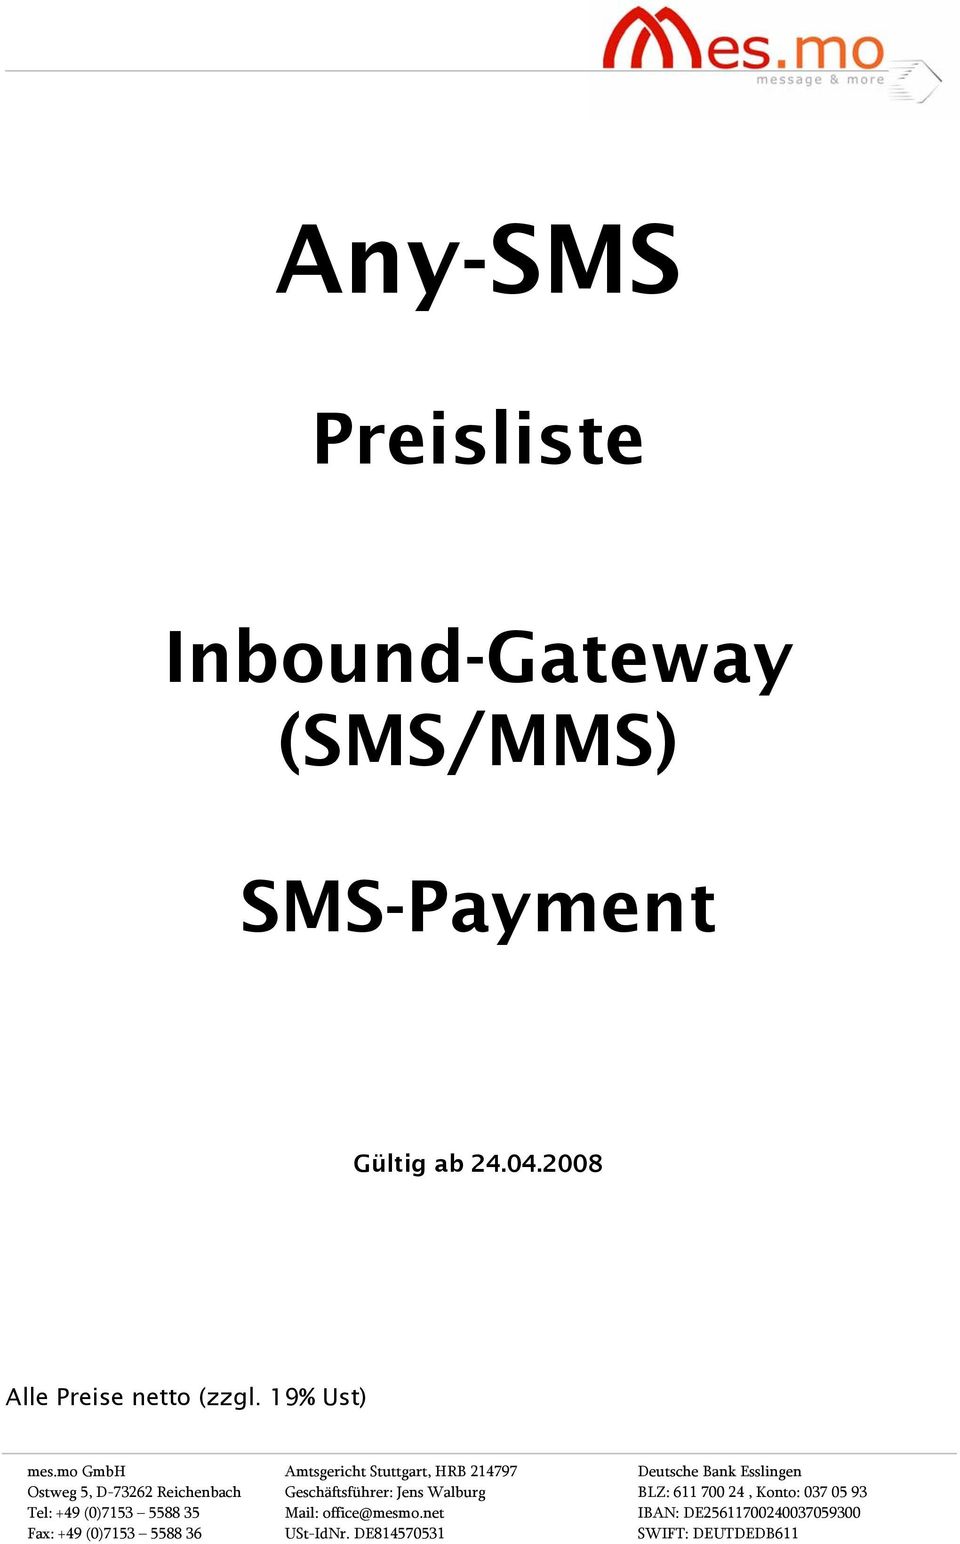 SMS-Payment Gültig ab 24.04.